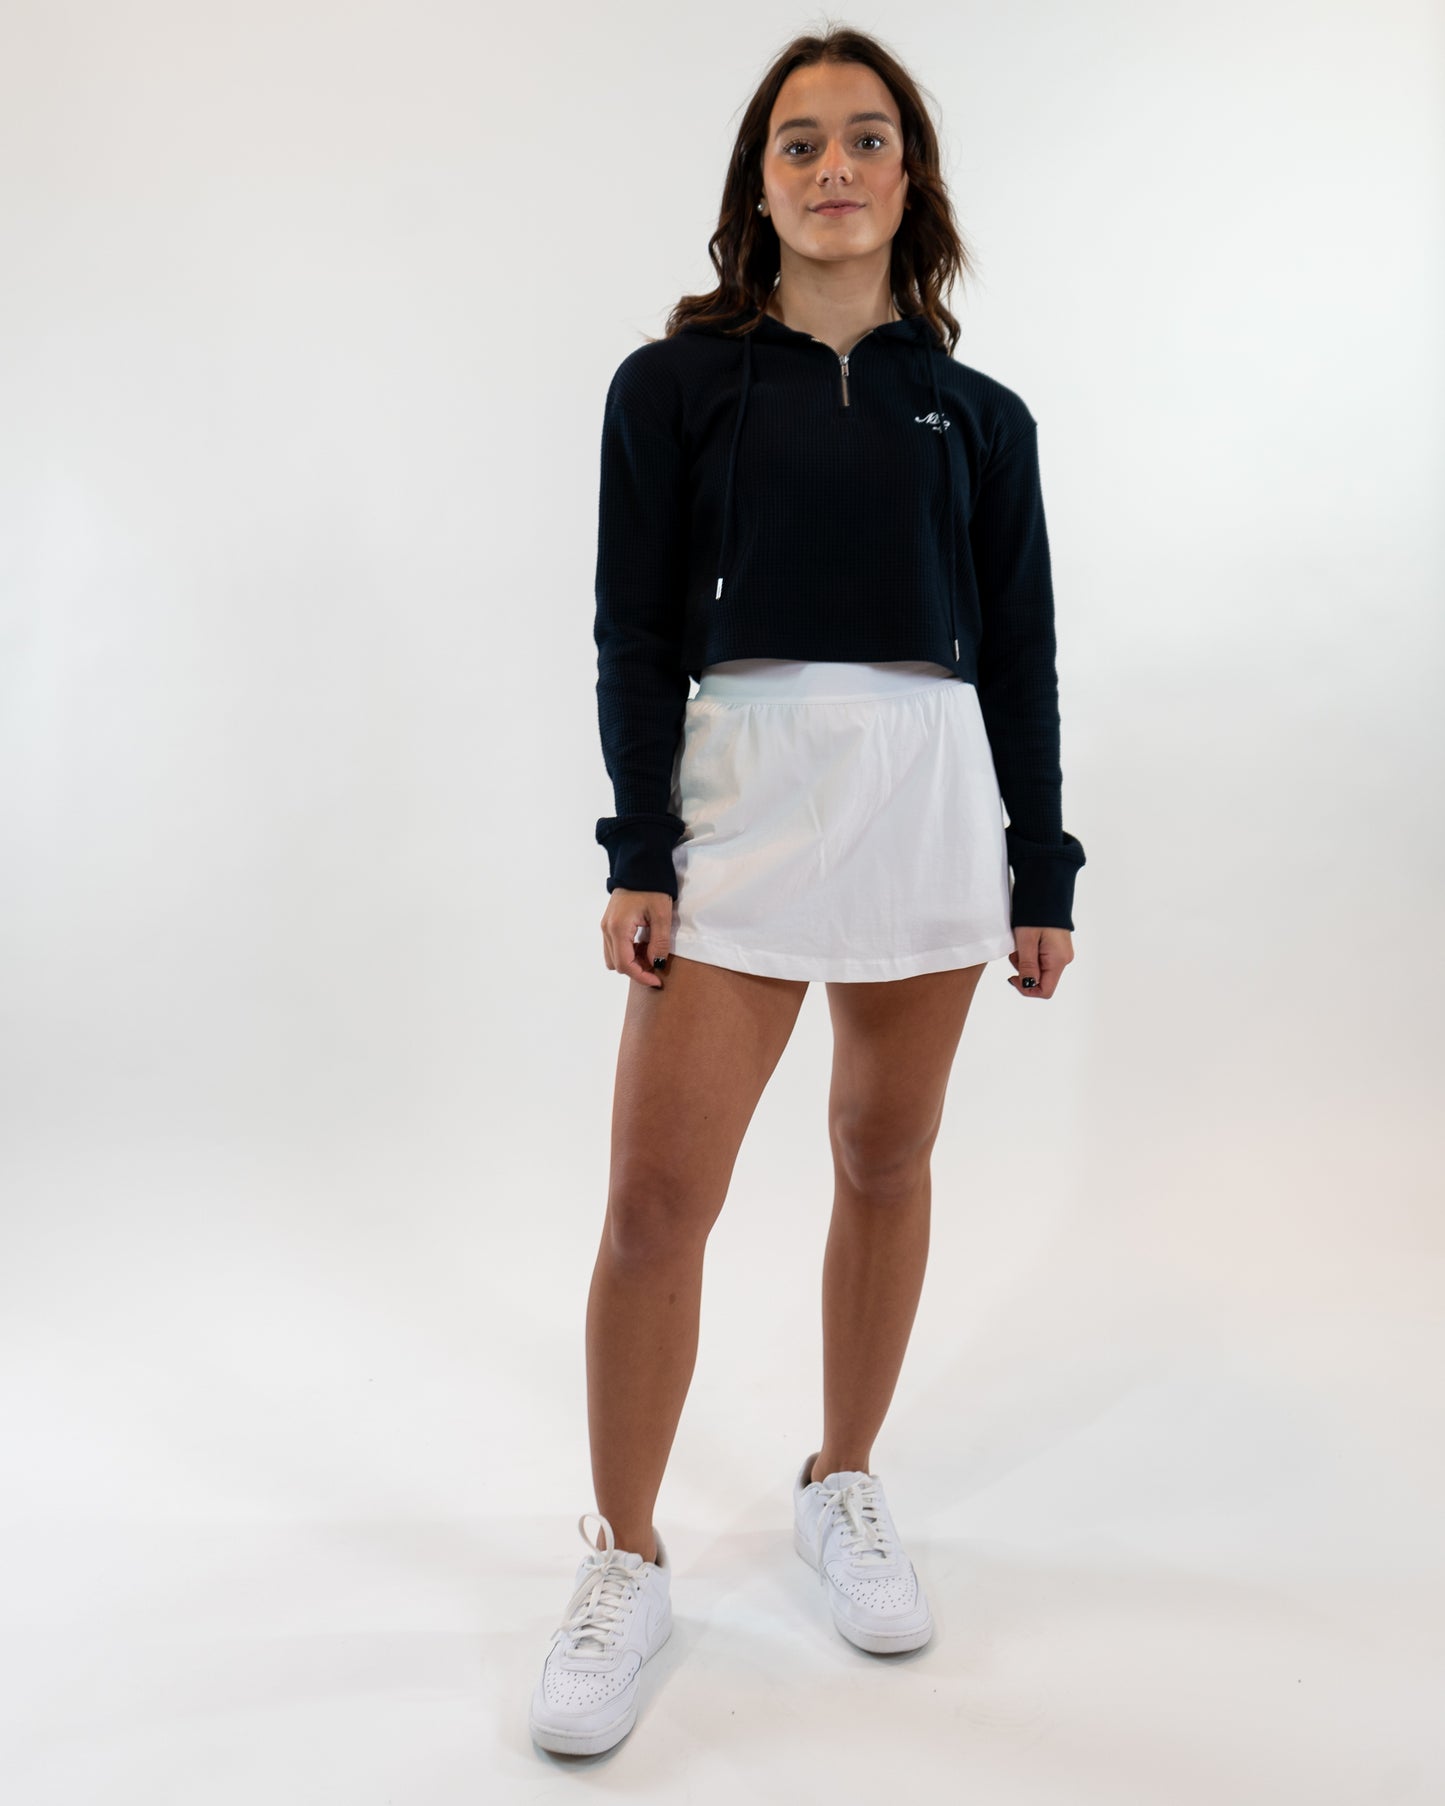 Serena A-Line Tennis Skirt (White)